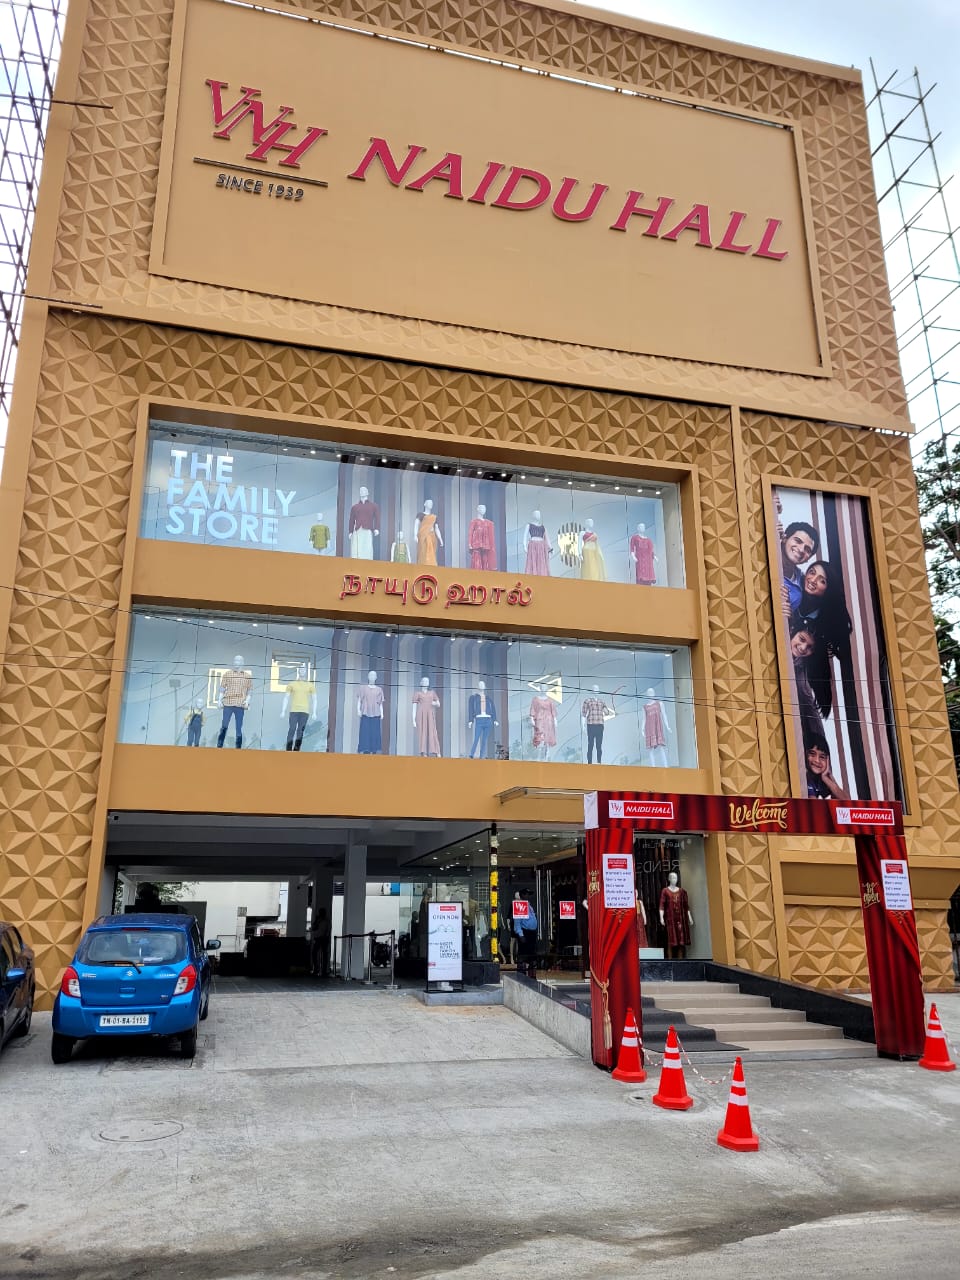 Naidu Hall The Family Store